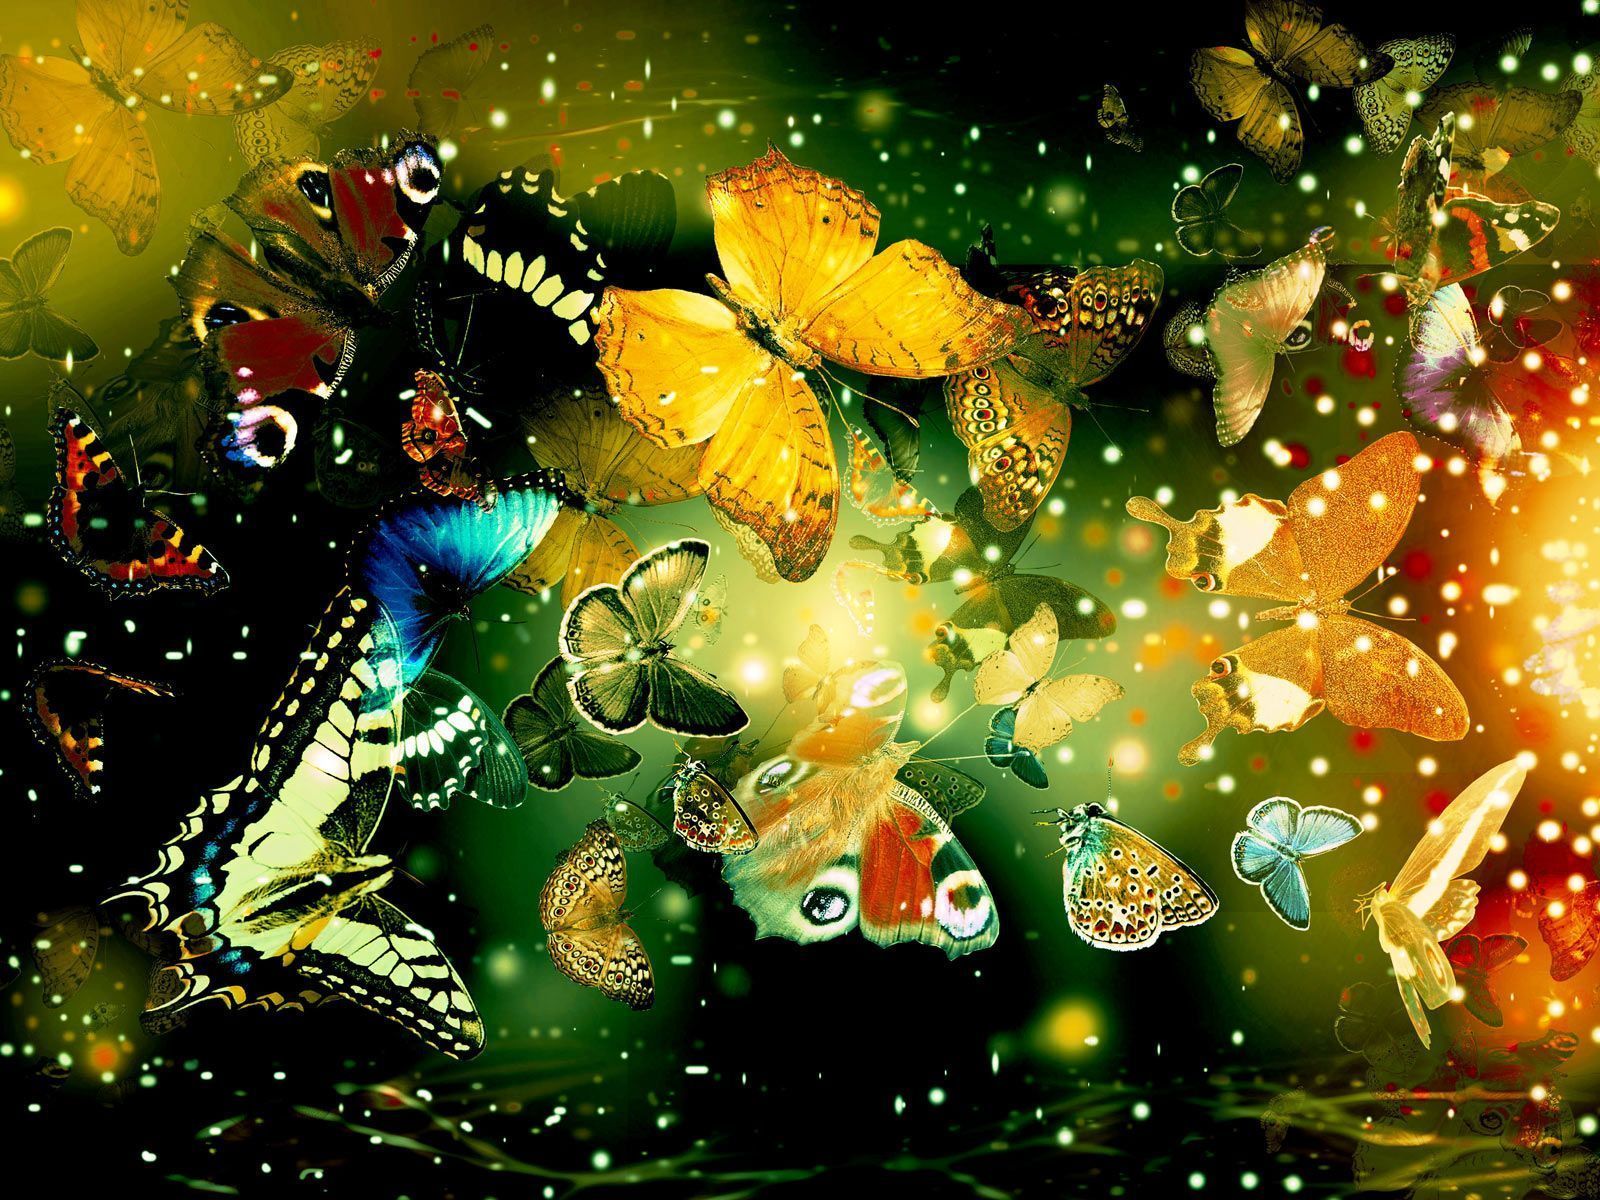 Desktop Wallpaper Gallery Windows 7 Butterflies desktop